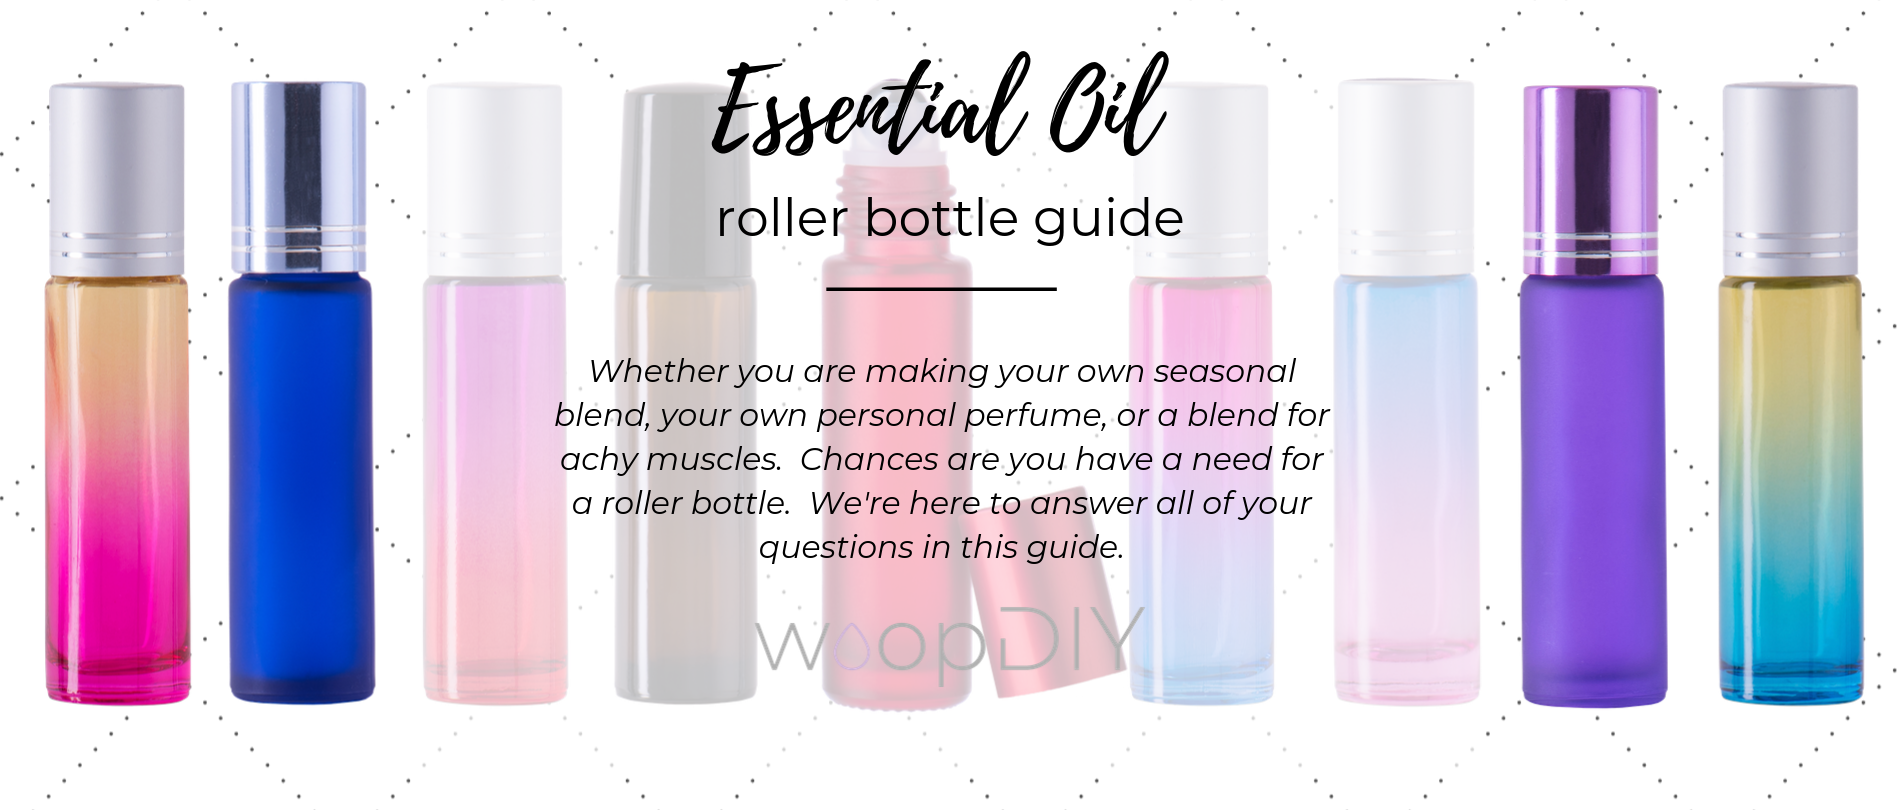 Essential Oil Roller Bottle Guide